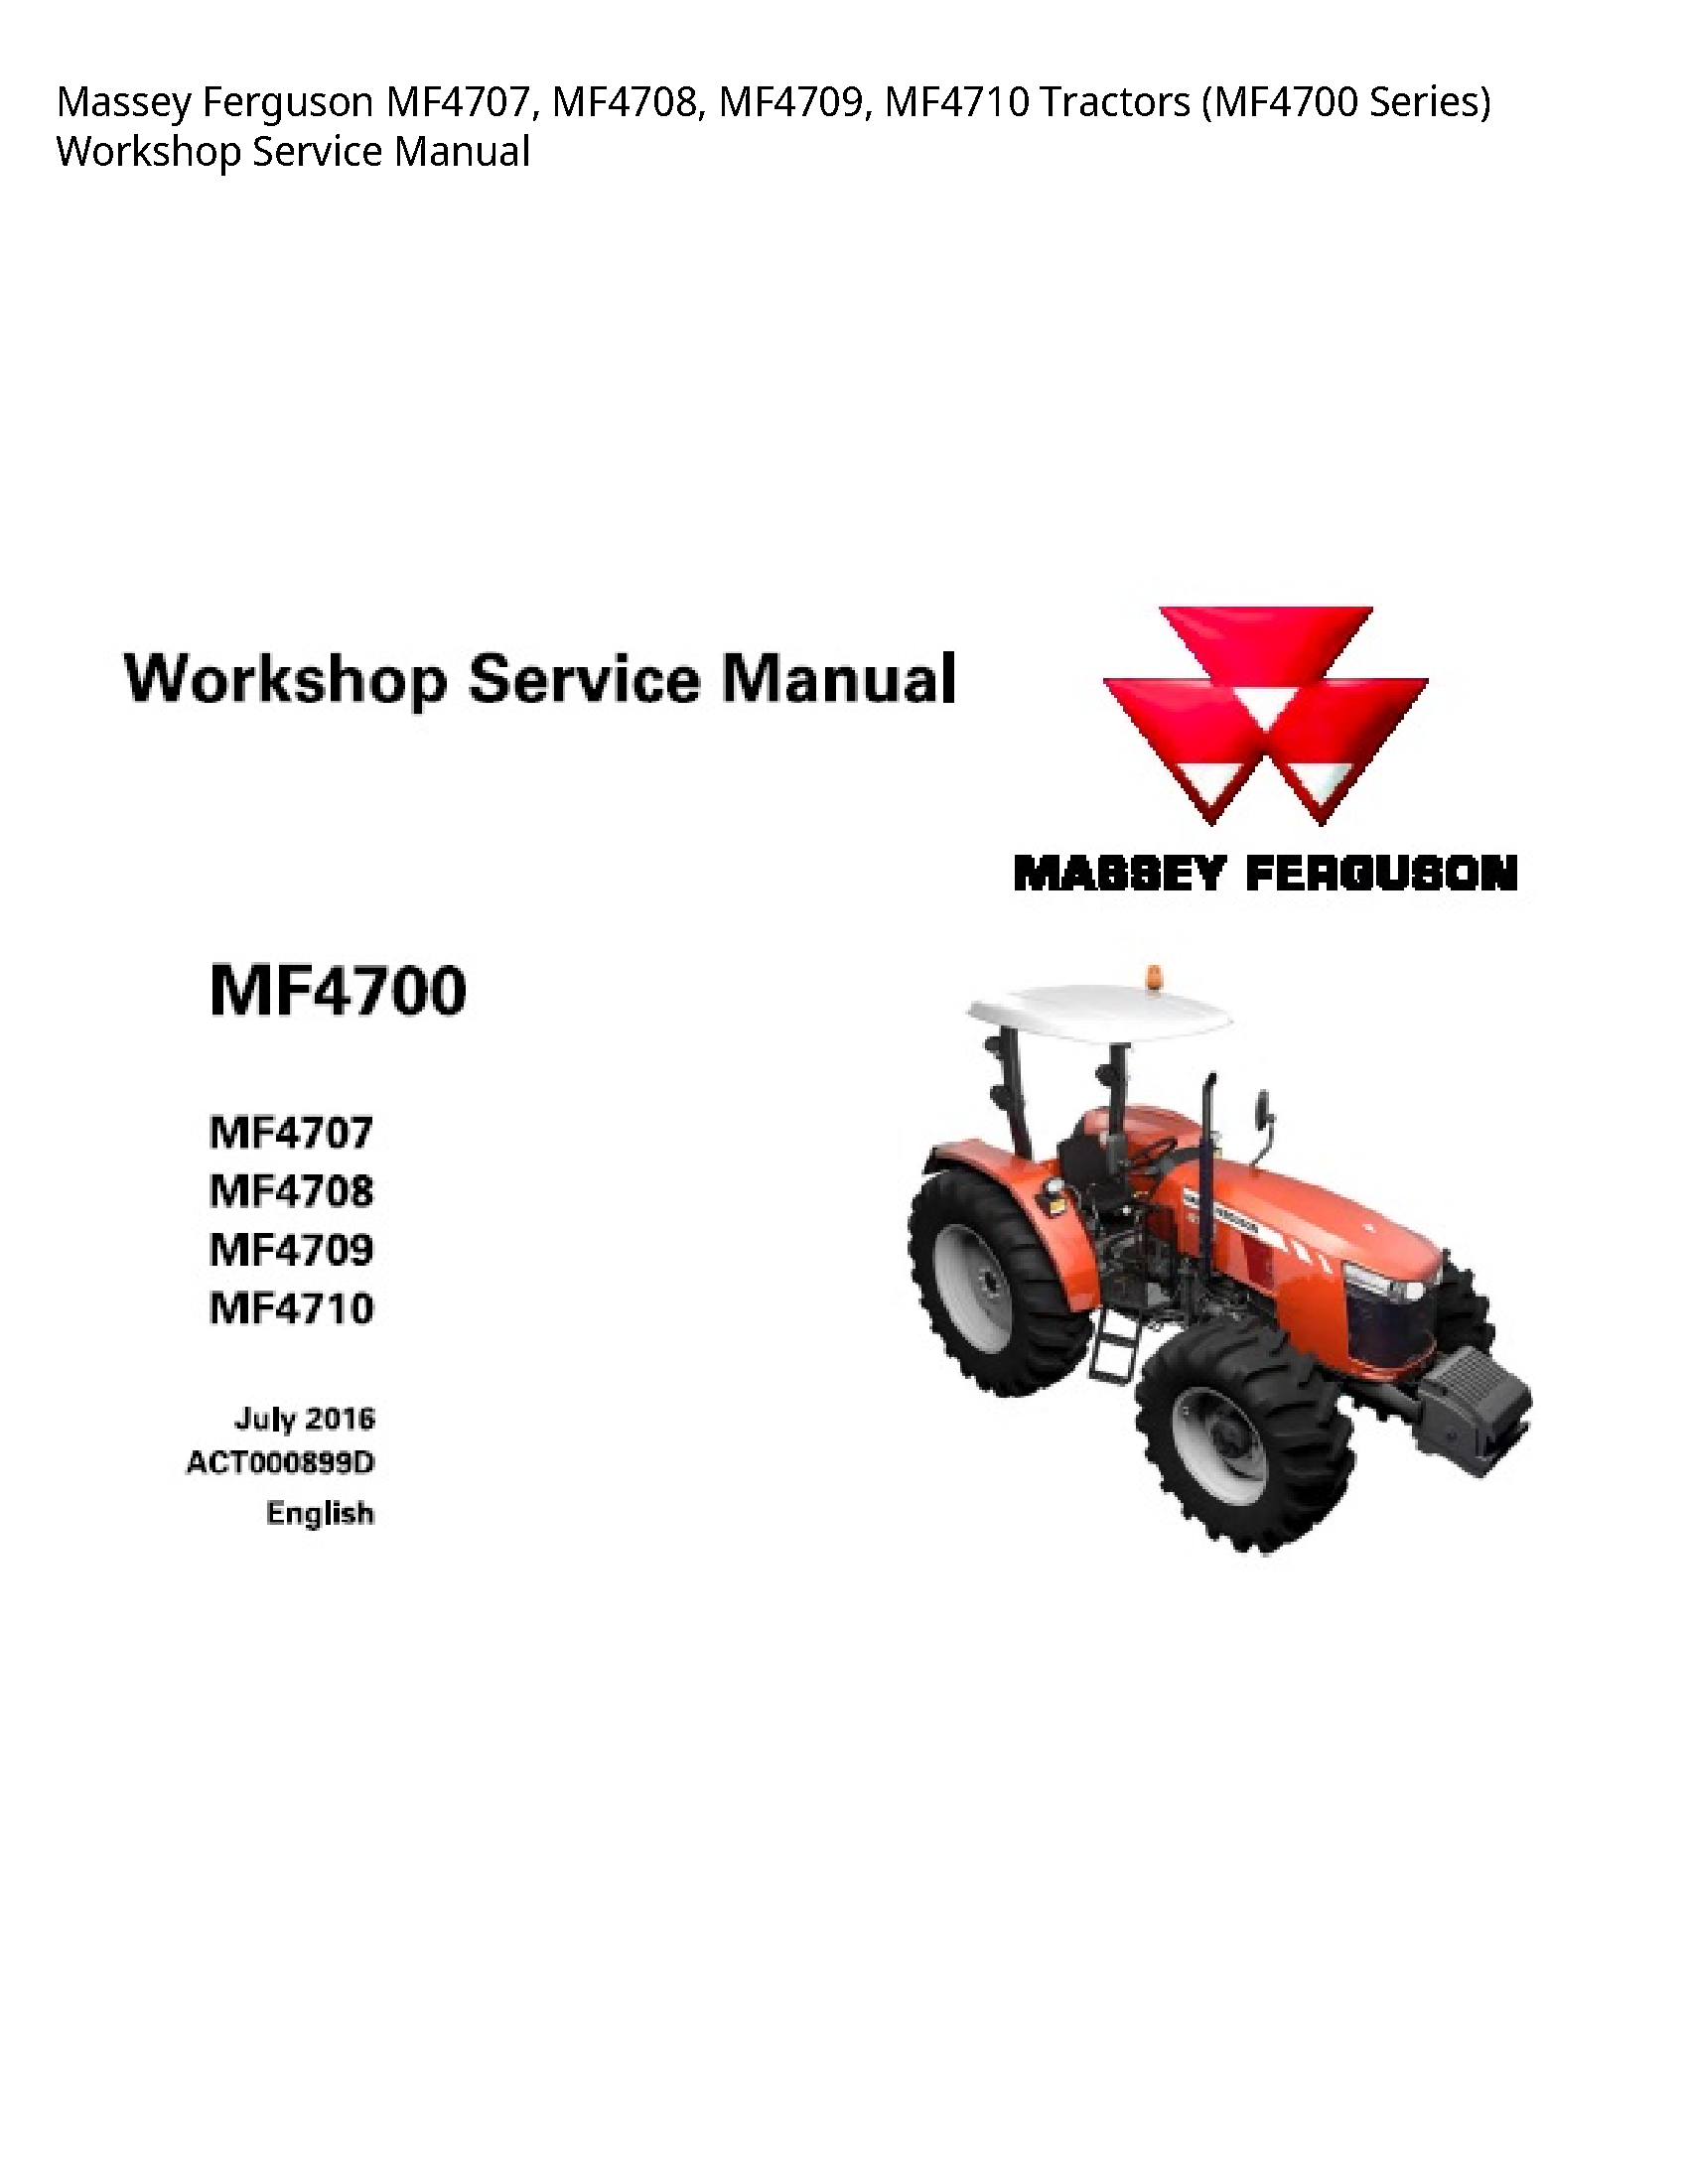 Massey Ferguson MF4707 Tractors Series) Service manual